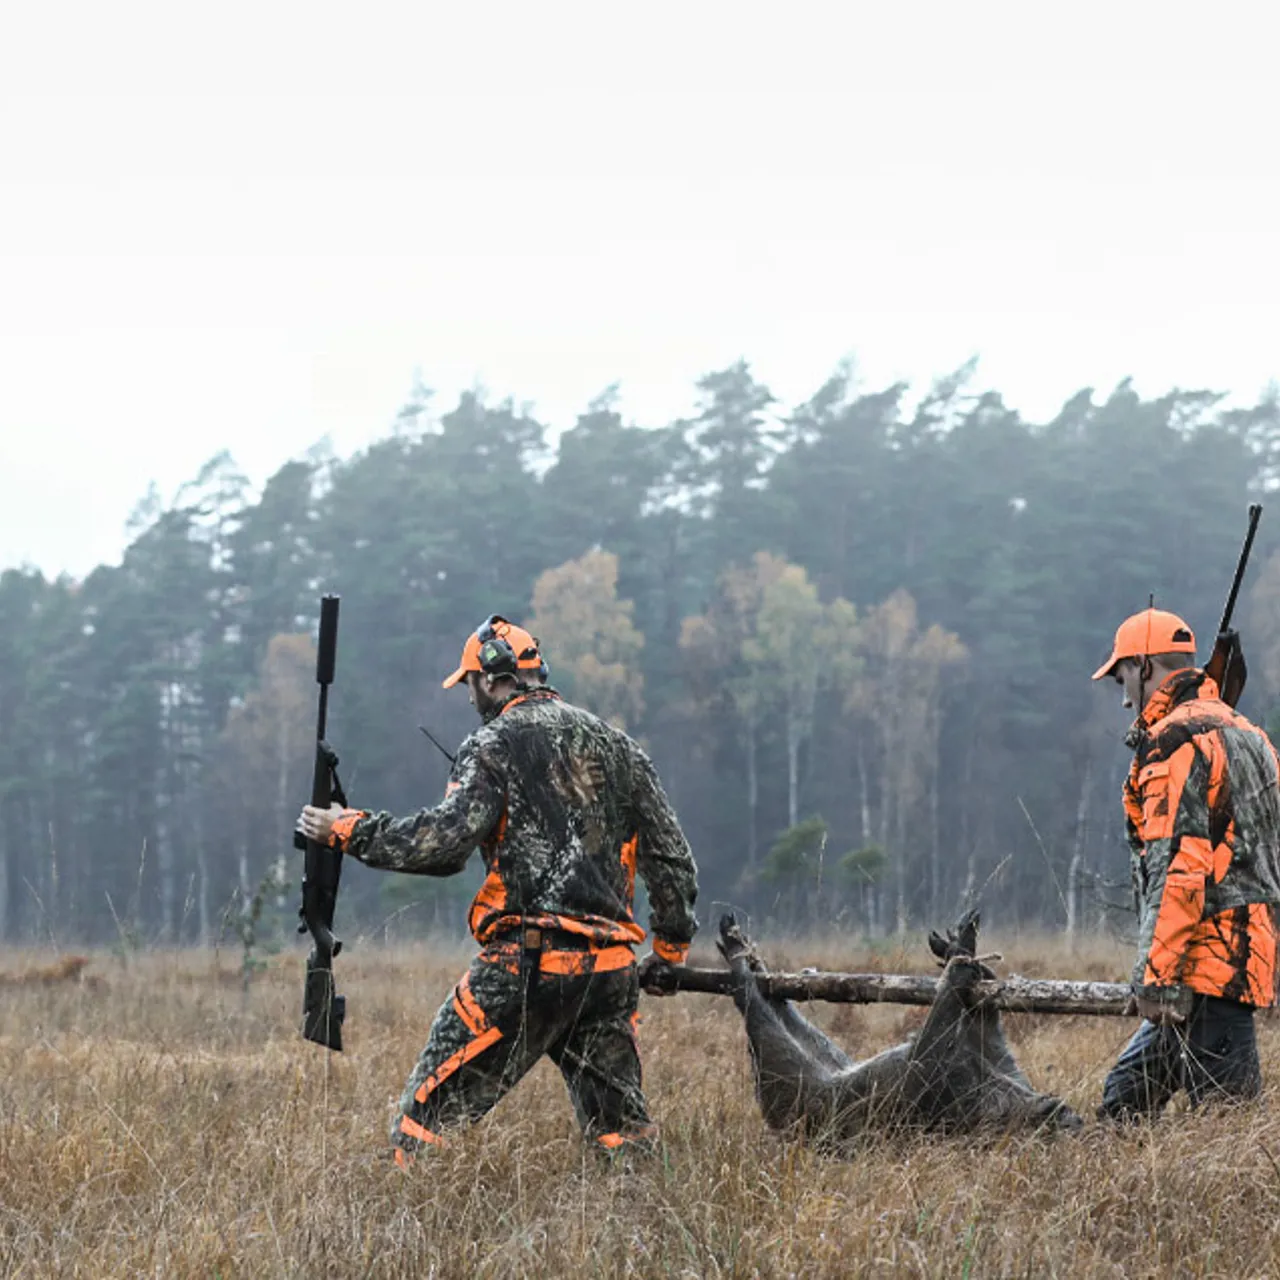  Hunting